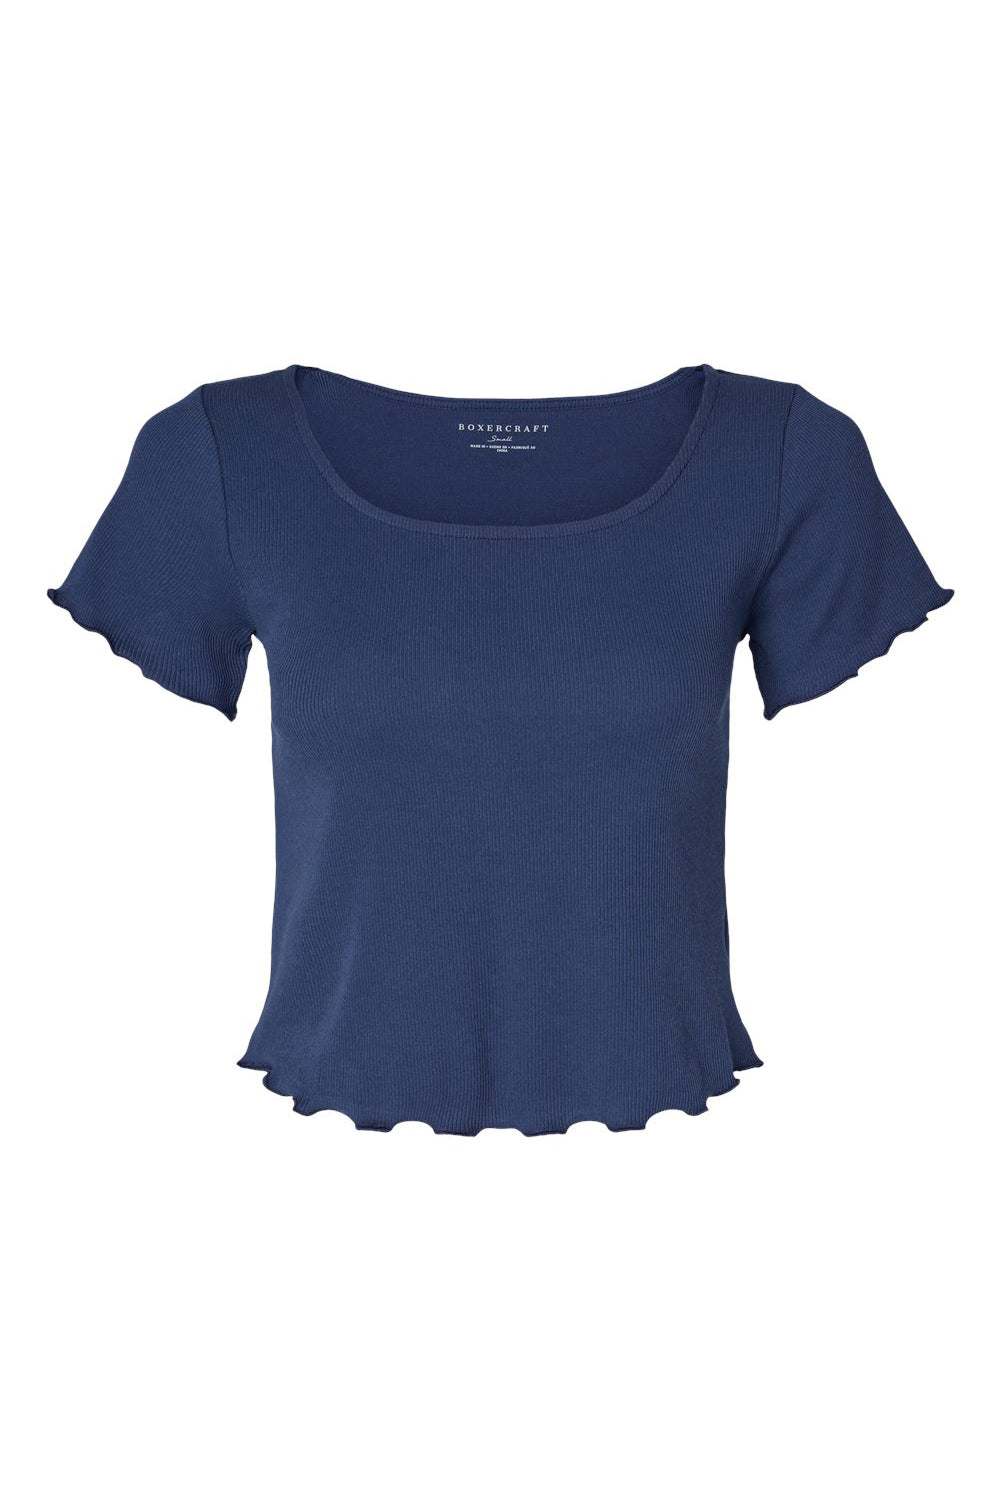 Boxercraft BW2403 Womens Baby Rib Short Sleeve Scoop Neck T-Shirt Navy Blue Flat Front